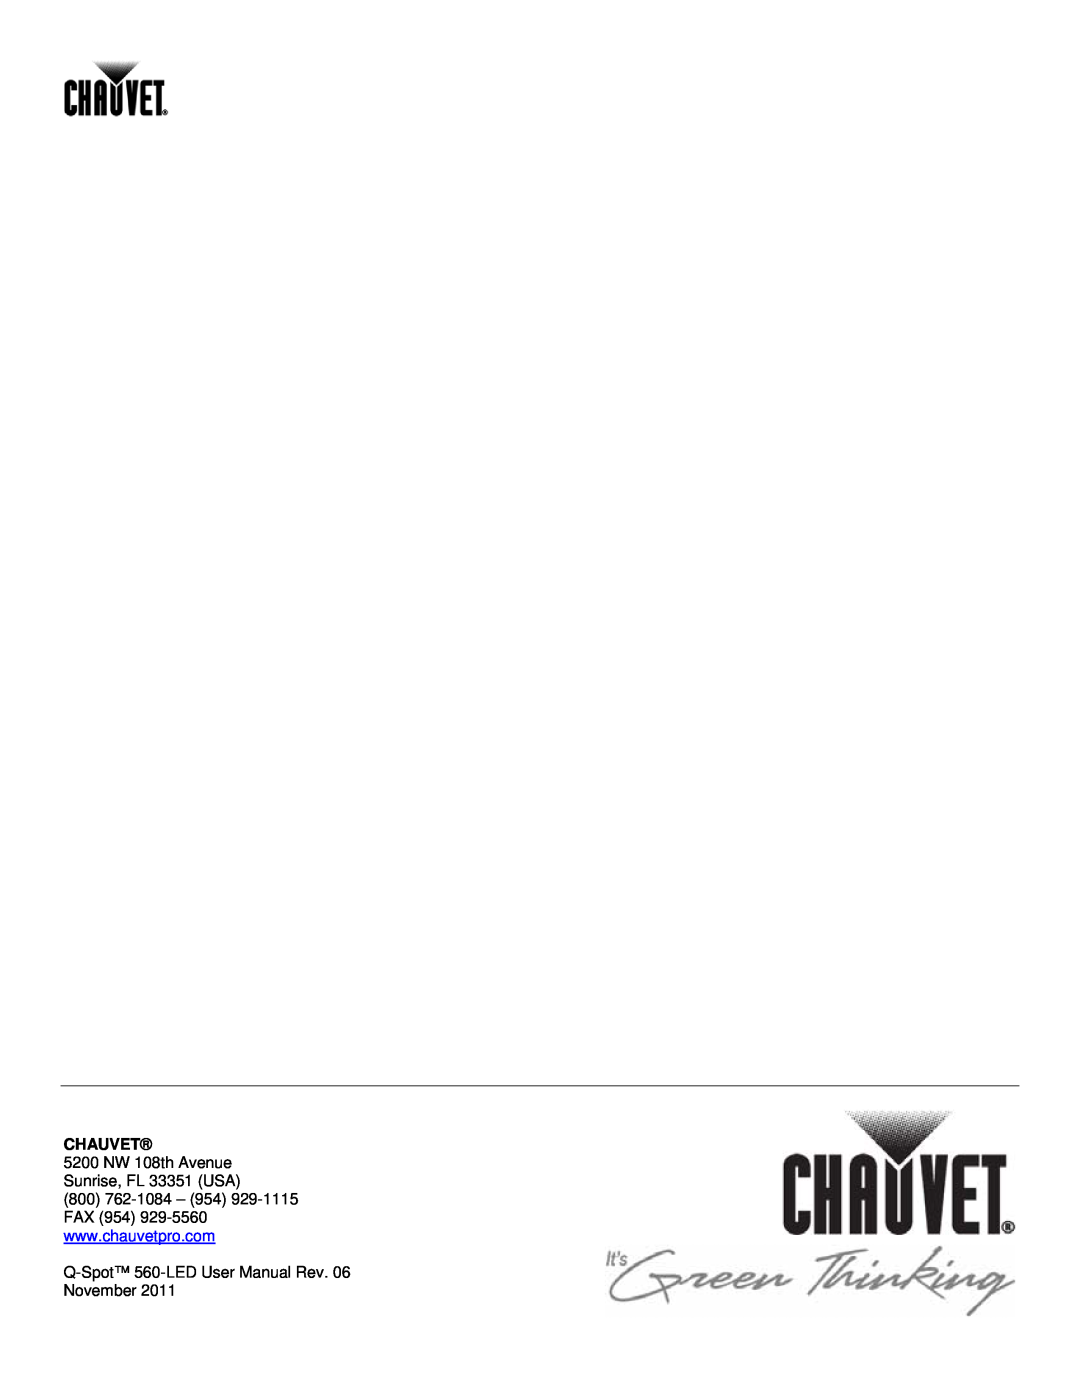 Chauvet 560 user manual Chauvet, 5200 NW 108th Avenue Sunrise, FL 33351 USA 